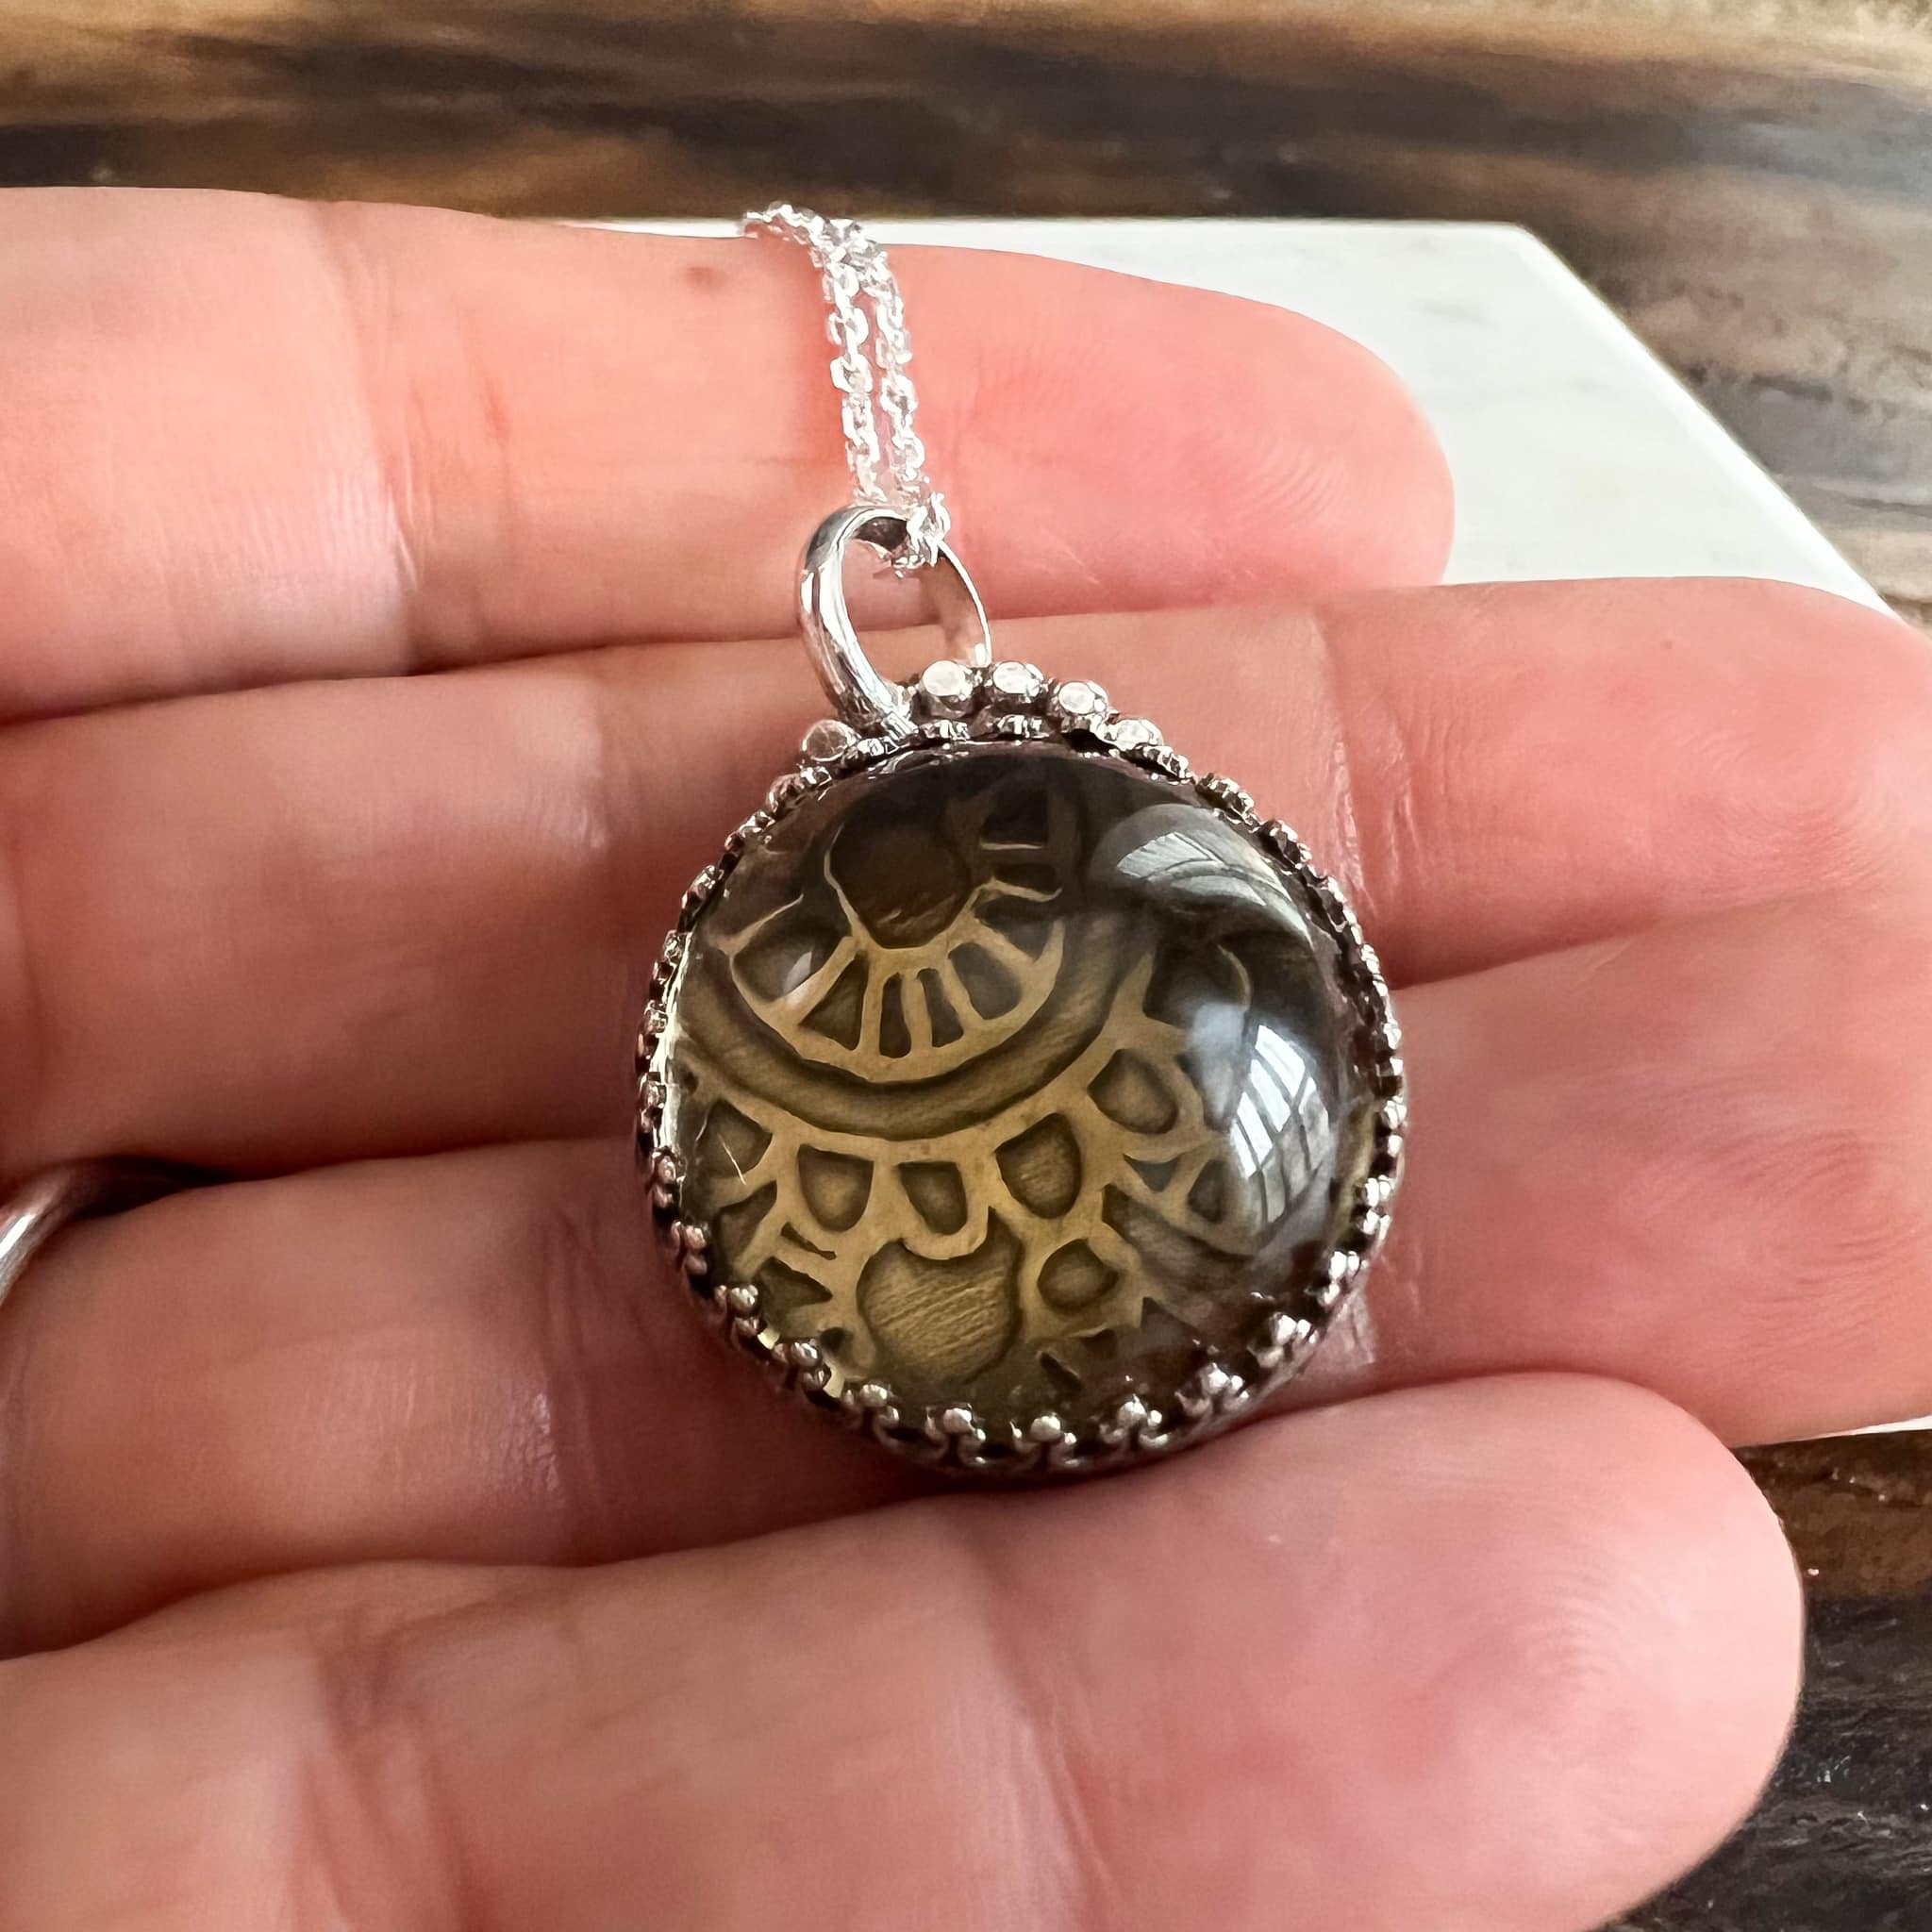 Smokey quartz pendant with whimsical pattern